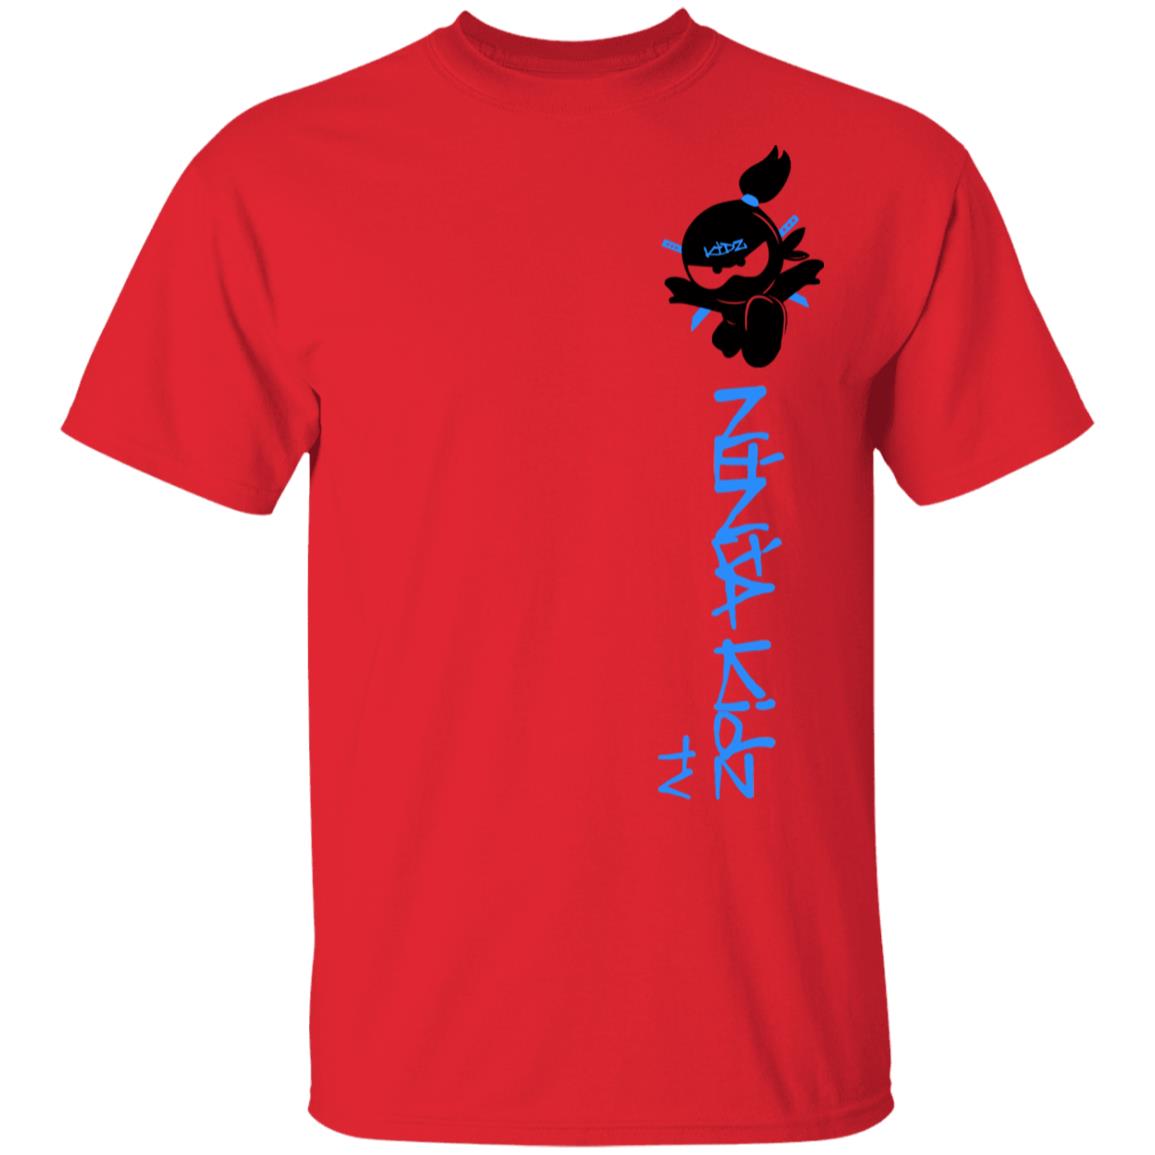 Ninja Kids Merch Ninja Kidz TV Girl T Shirt
#NinjaKidzTV #NinjaKidsMerch #GirlTShirt #KidFashion #NinjaKidzGear #TrendyKidsApparel #USFashionKids #PopularKidsMerch #NinjaKidzCraze #YouthStreetwear #AmericanKidsStyle #CoolKidzClothing

tipatee.com/product/ninja-…